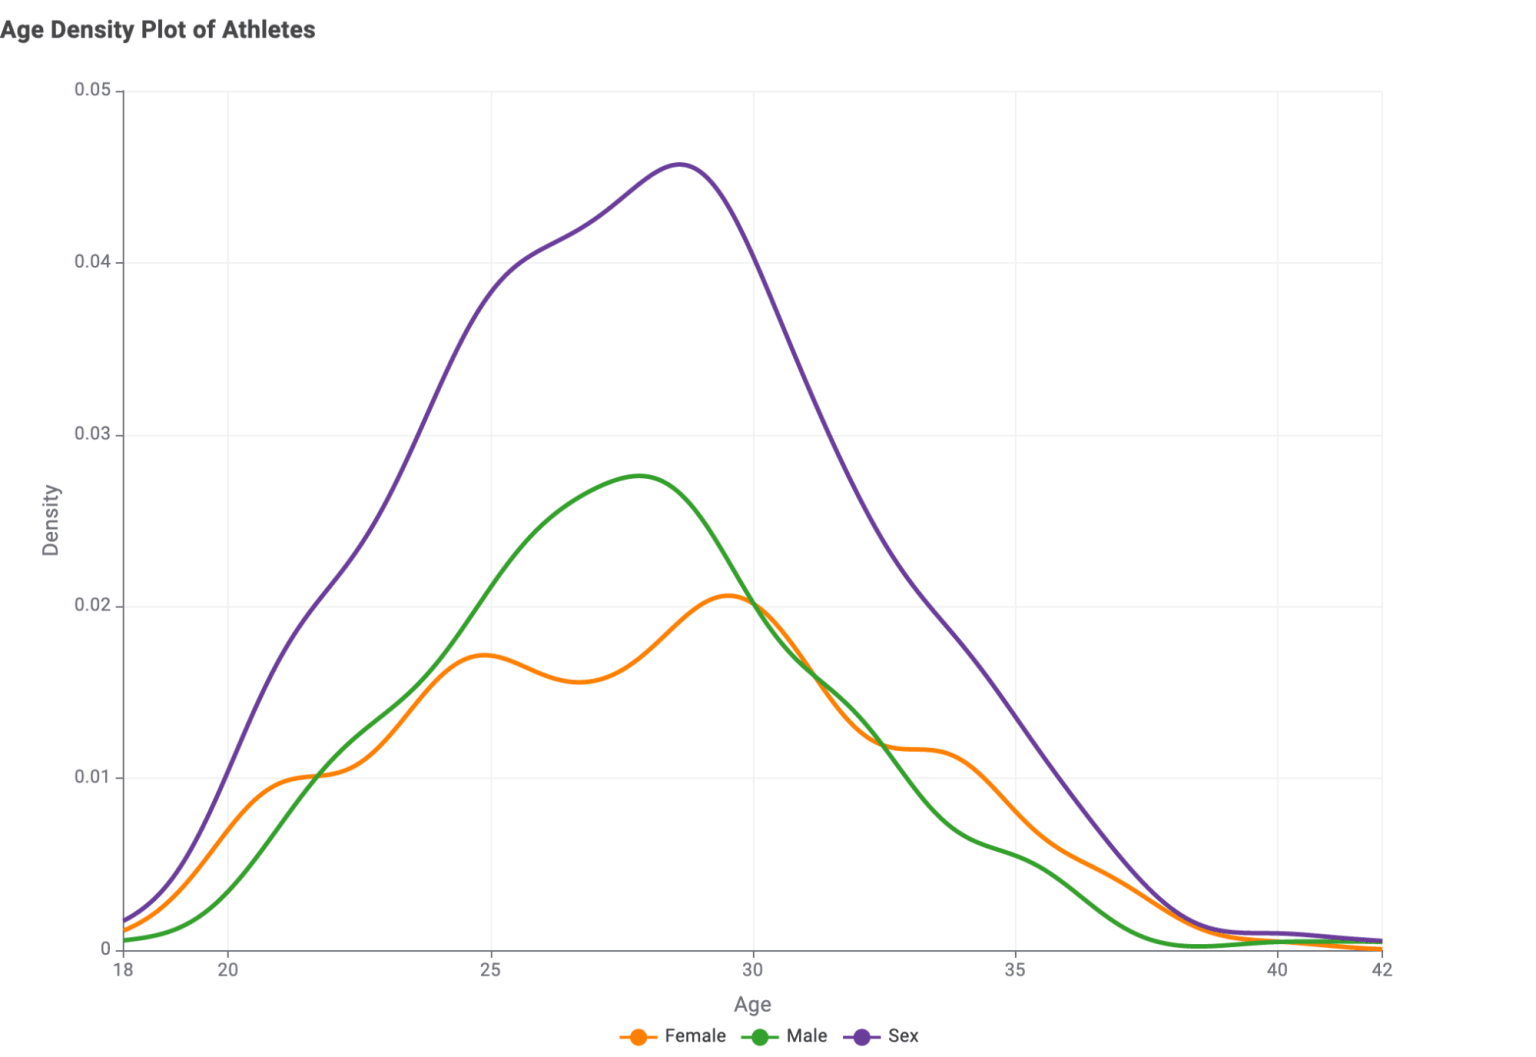 Age density of triathlon athletes